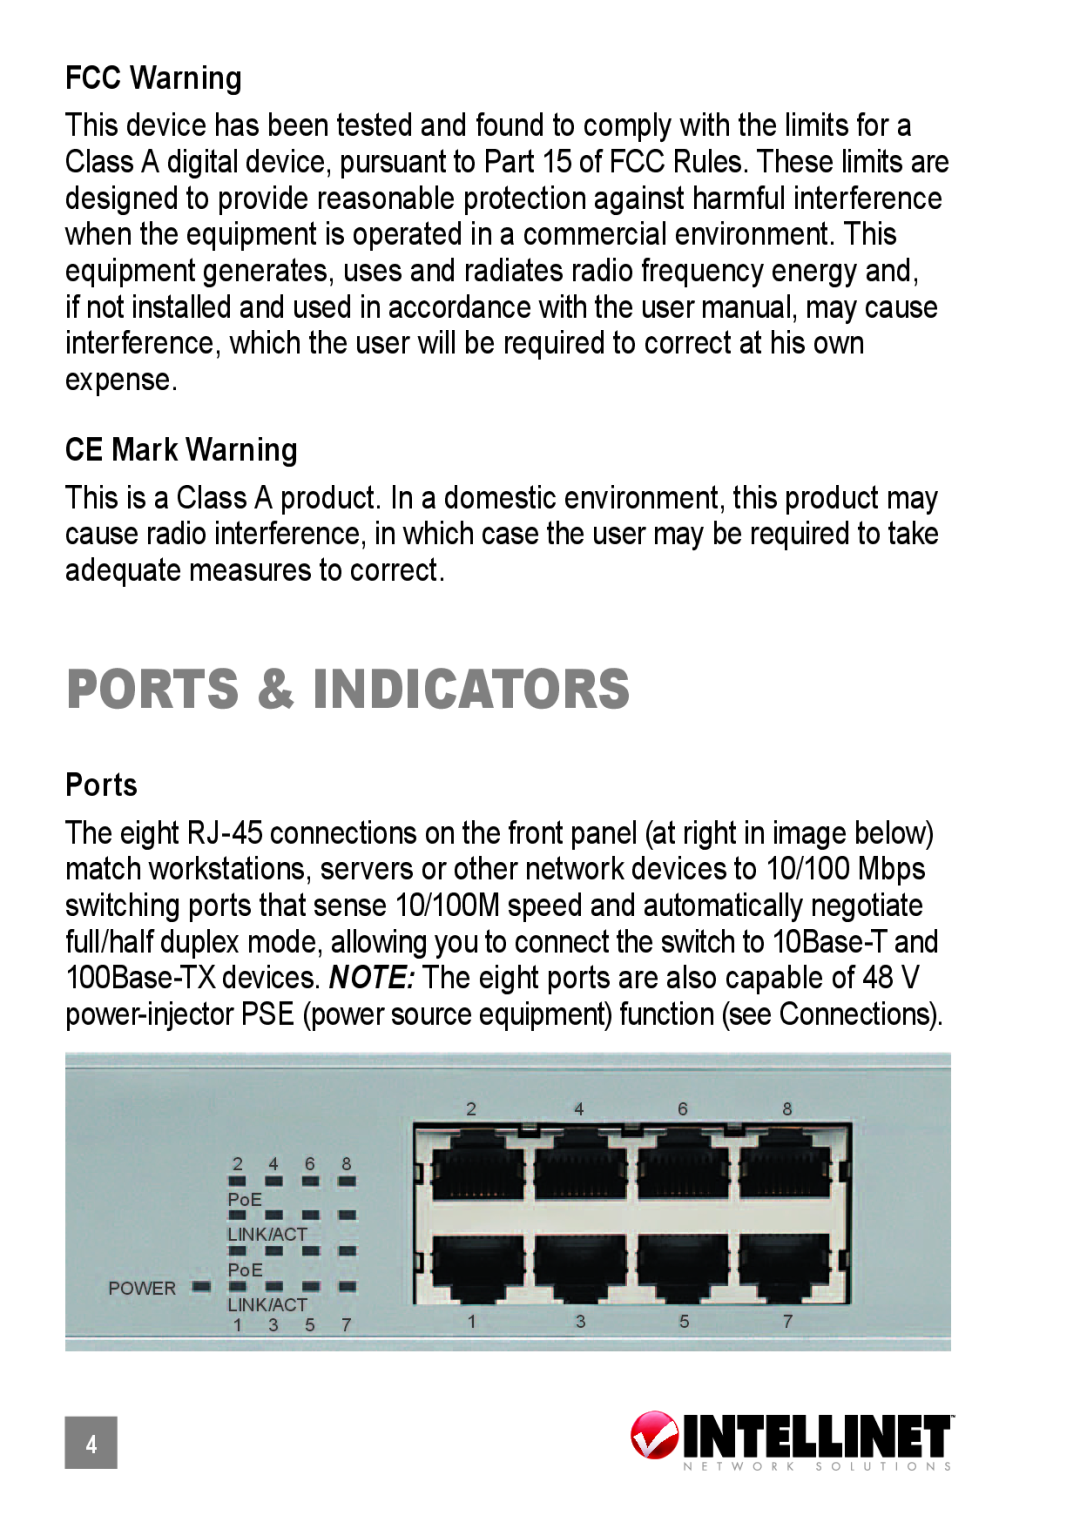 Intellinet Network Solutions 503358 user manual ports & indicators, FCC Warning, CE Mark Warning, Ports 